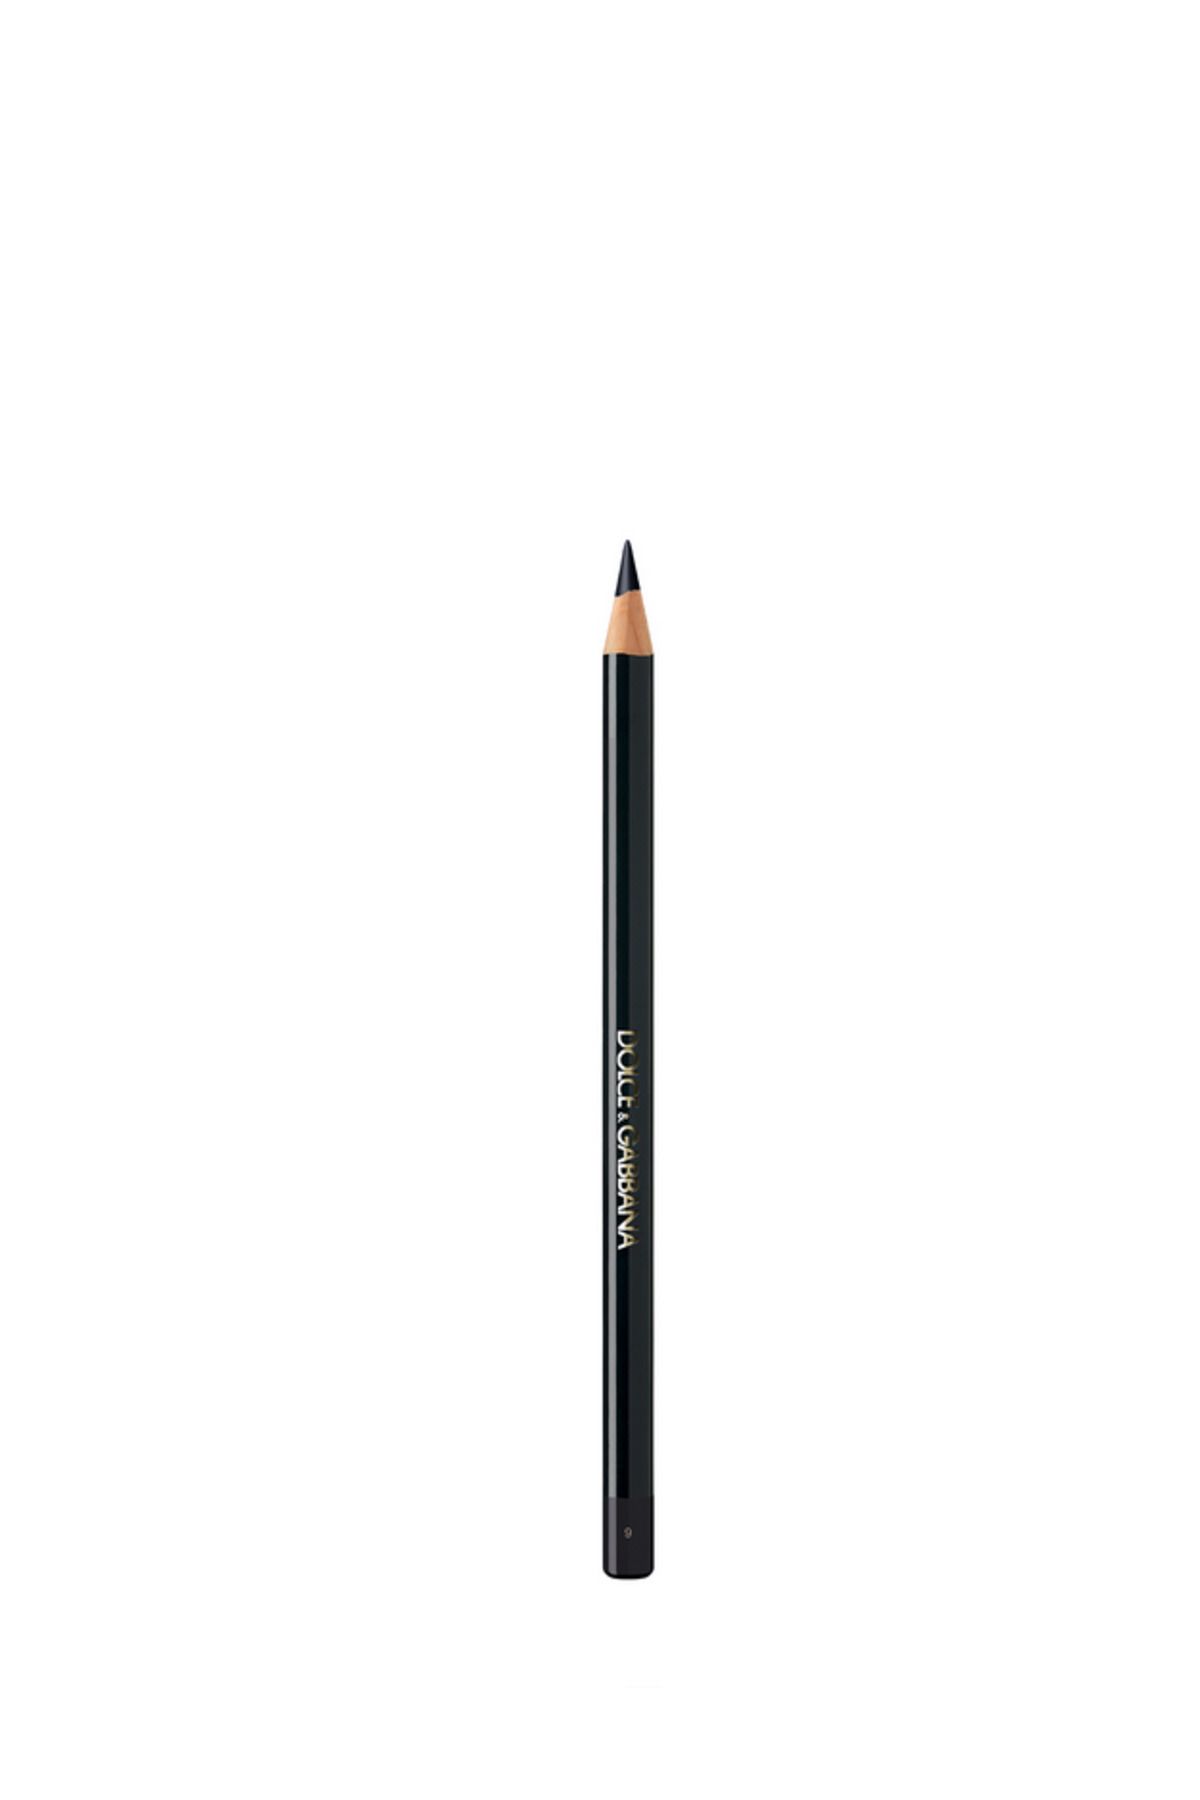 Dolce&Gabbana The Khol Pencil 6 Graphite